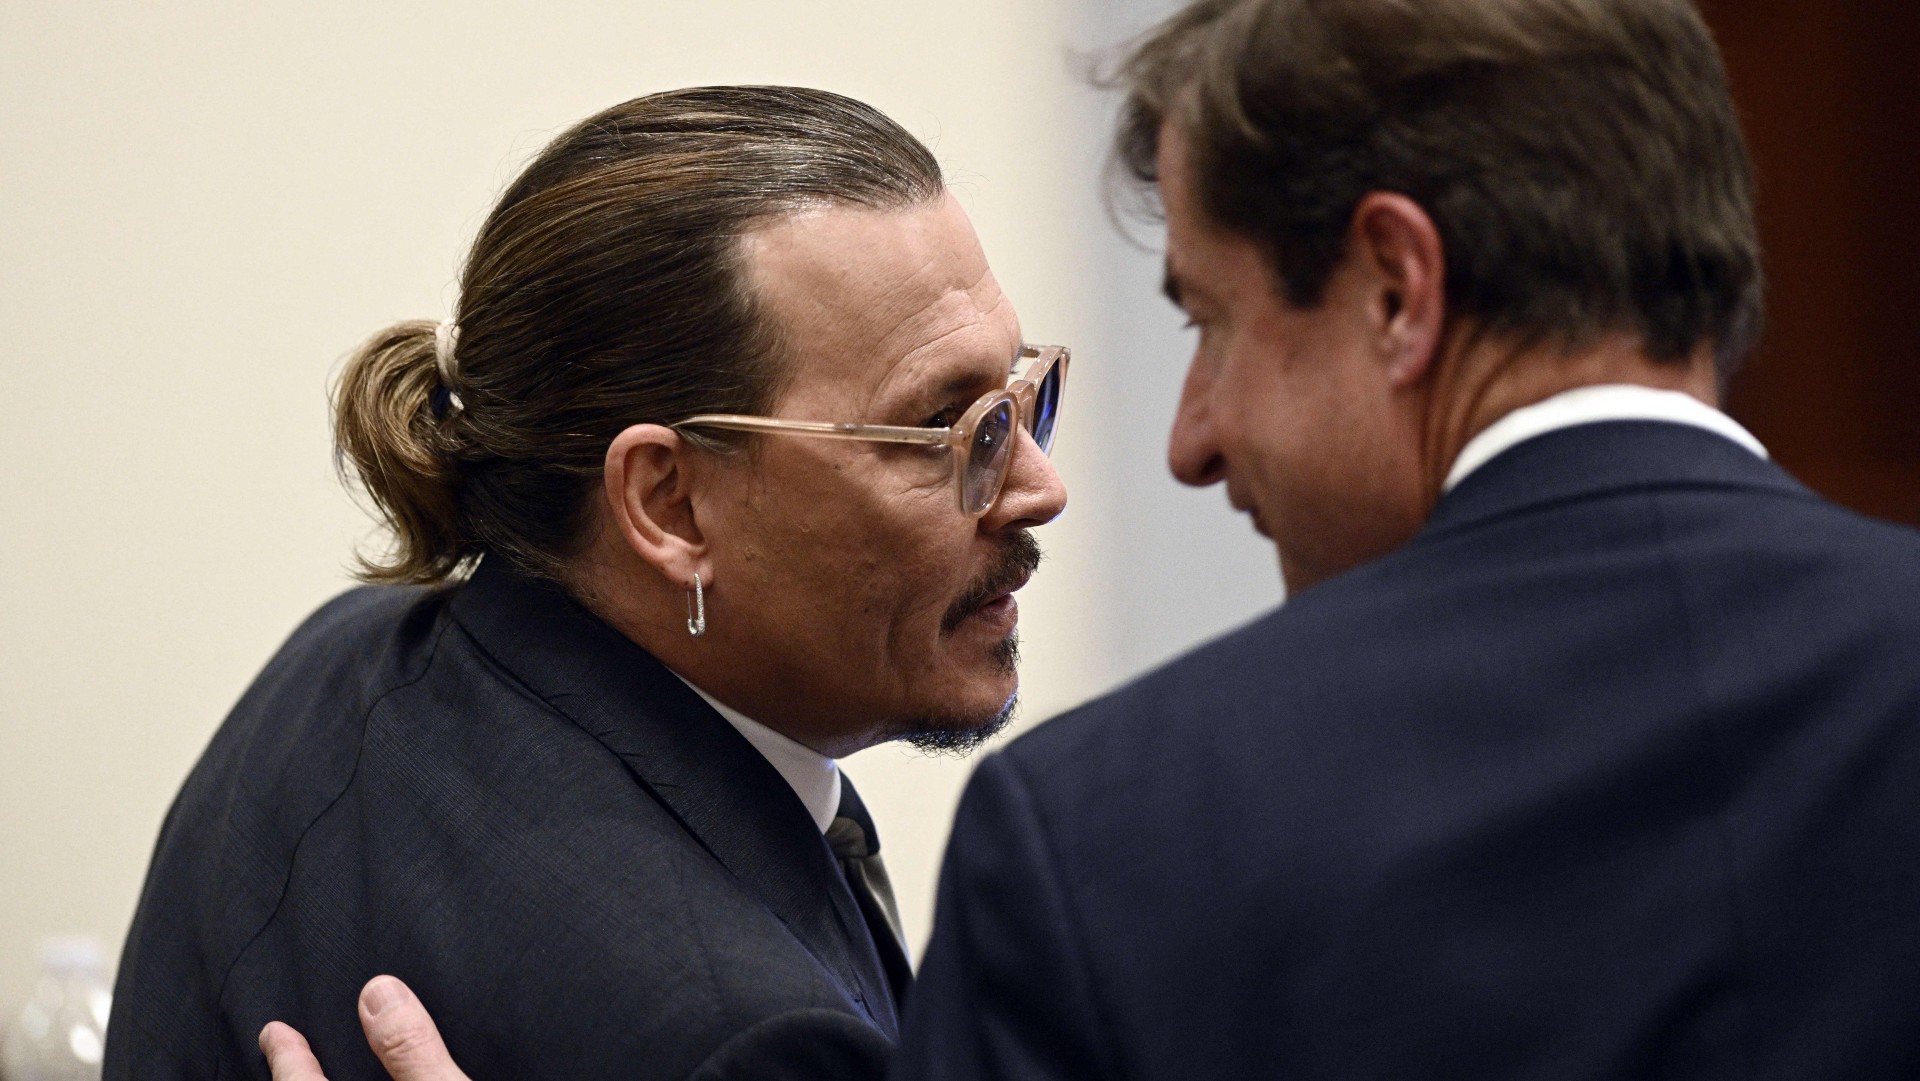 Johnny Depp talks to his attorney